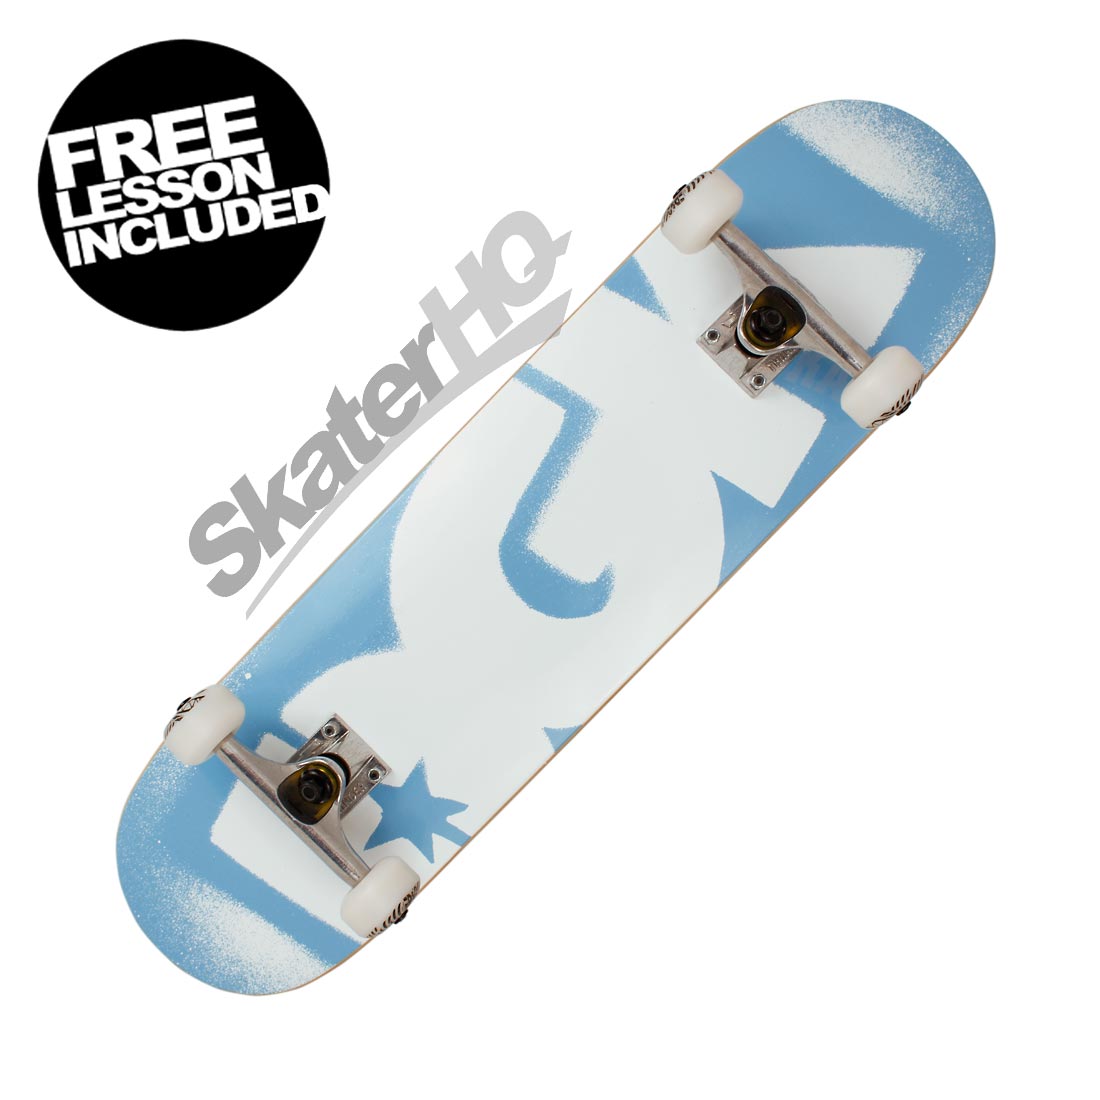 DGK Stencil 7.75 Complete - Blue Skateboard Completes Modern Street